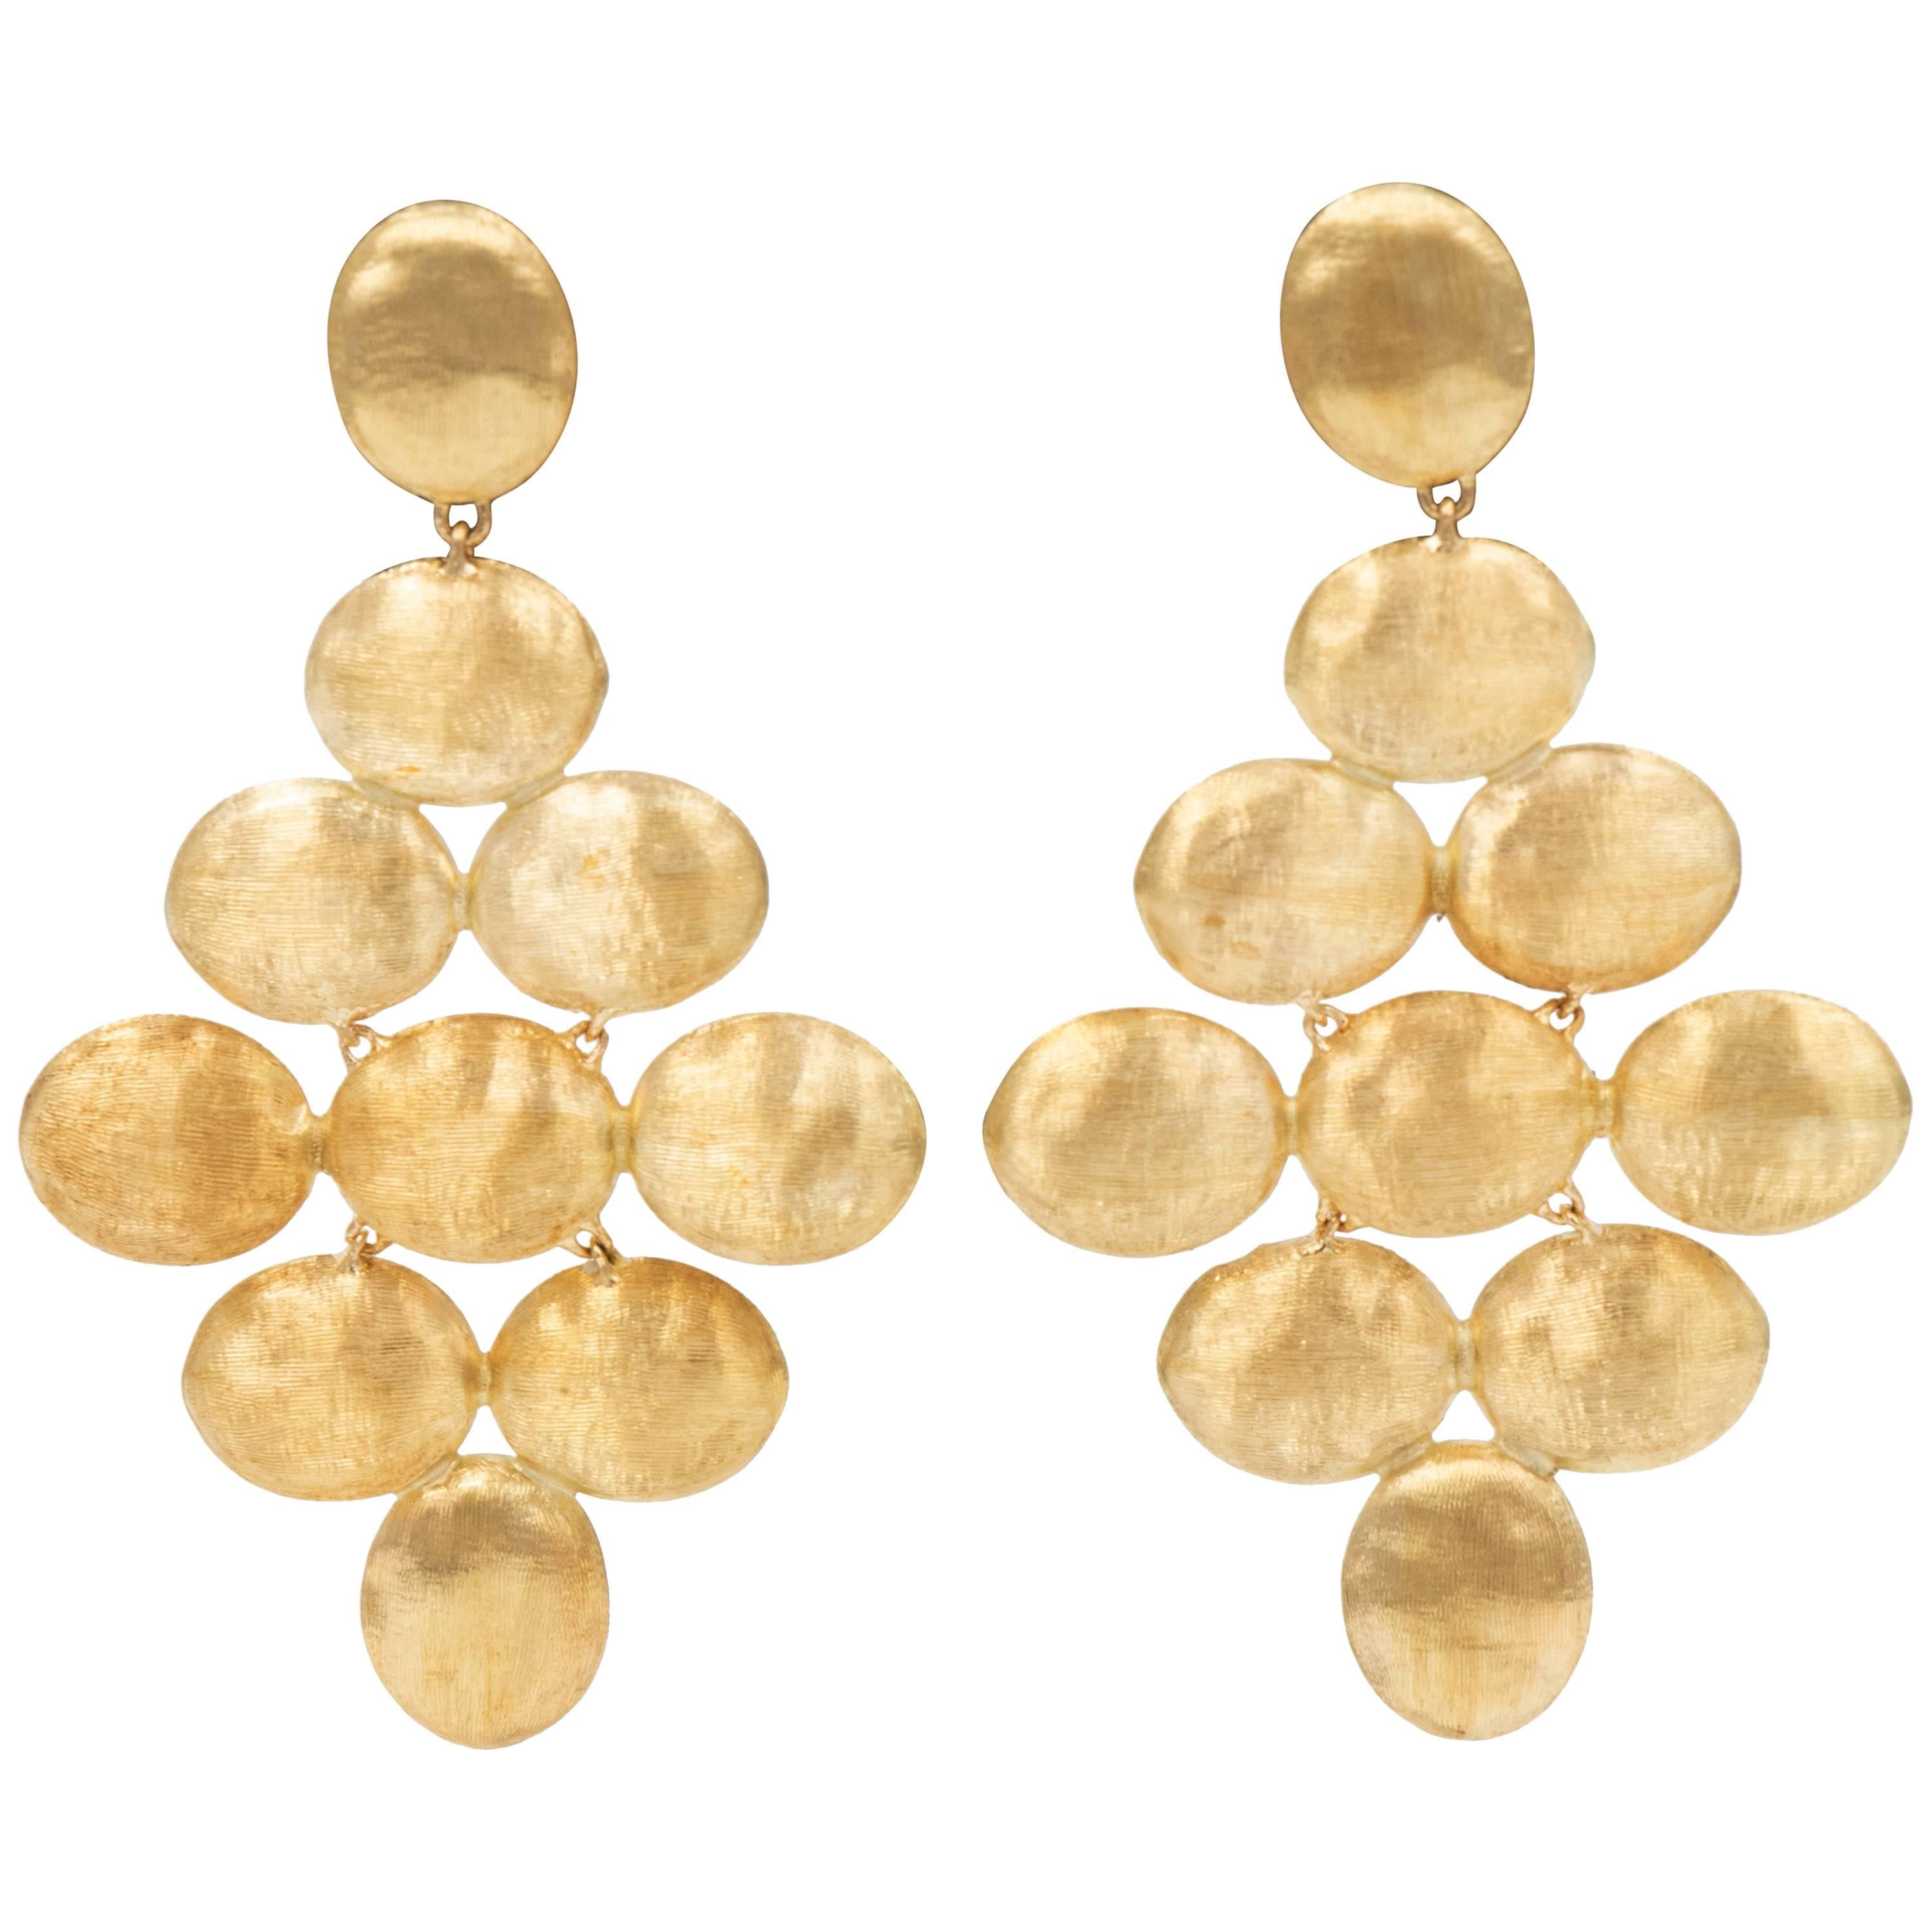 Marco Bicego Siviglia Large Chandelier Earrings - 18k Yellow Gold - OB1091 Y 02